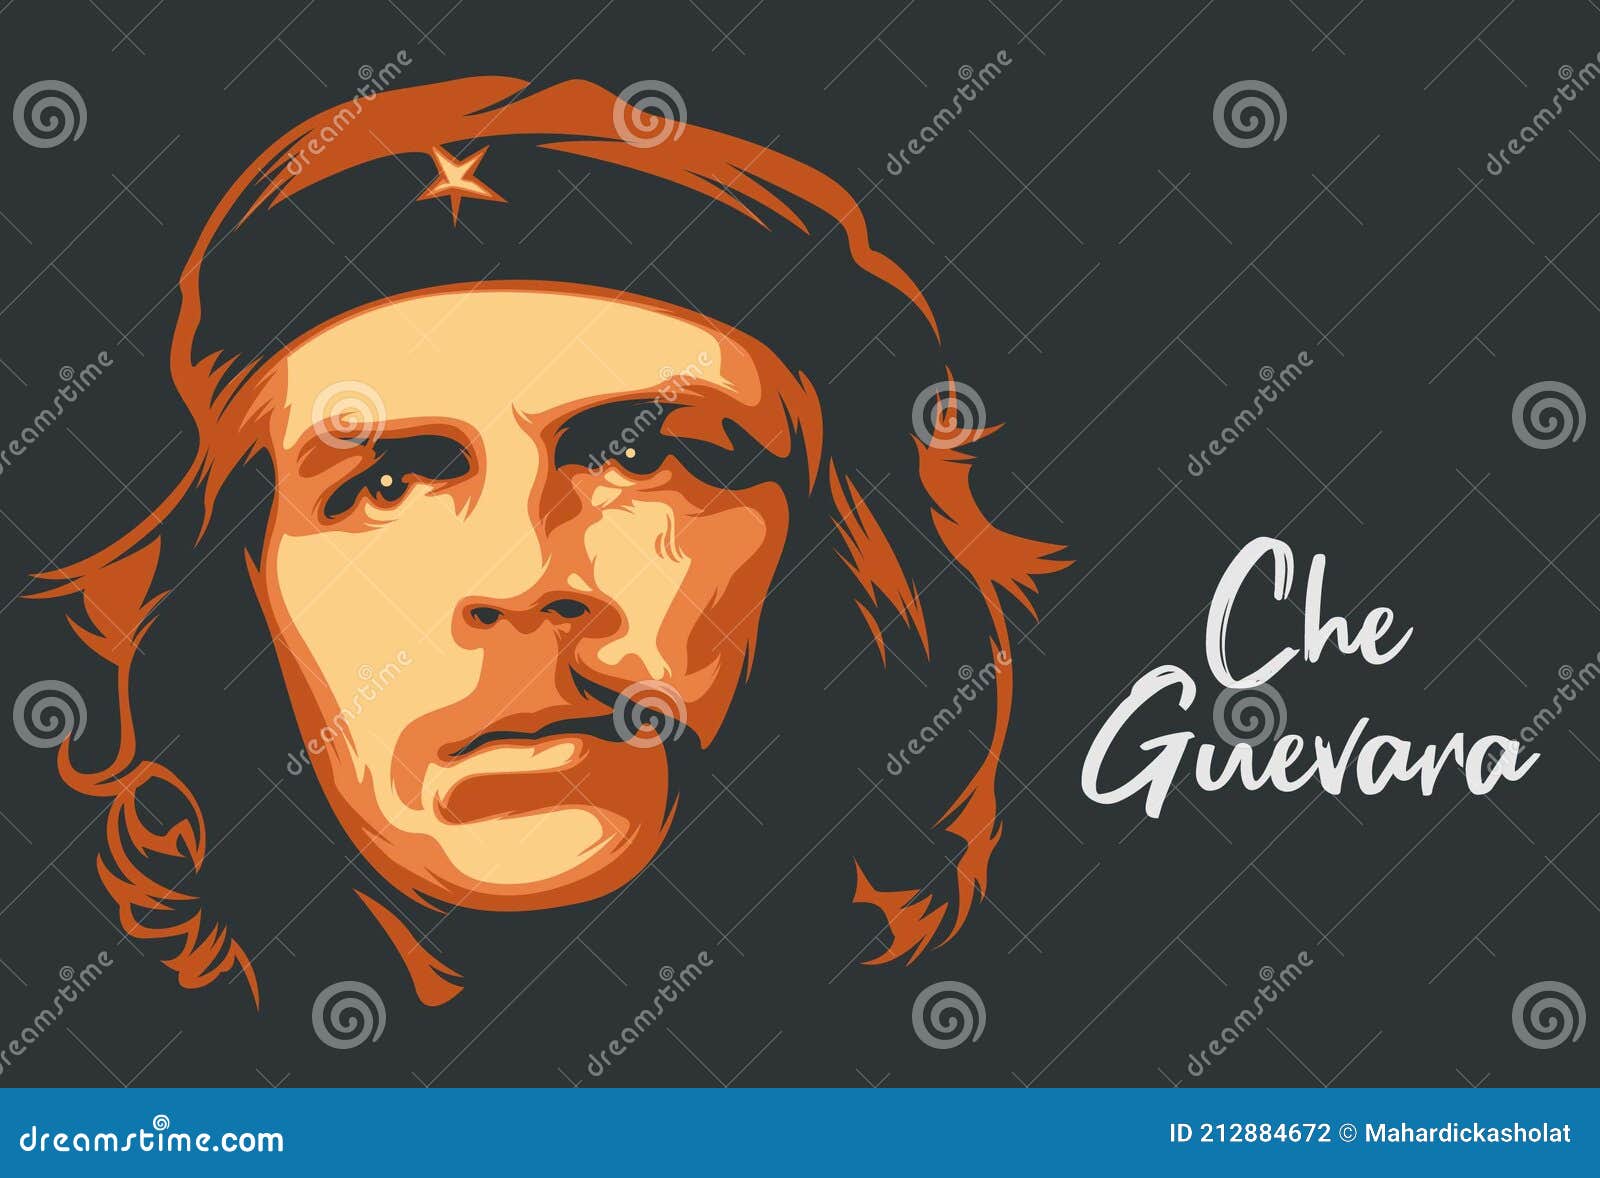 Che Guevara Line Art Portrait Vector Illustration Template ...